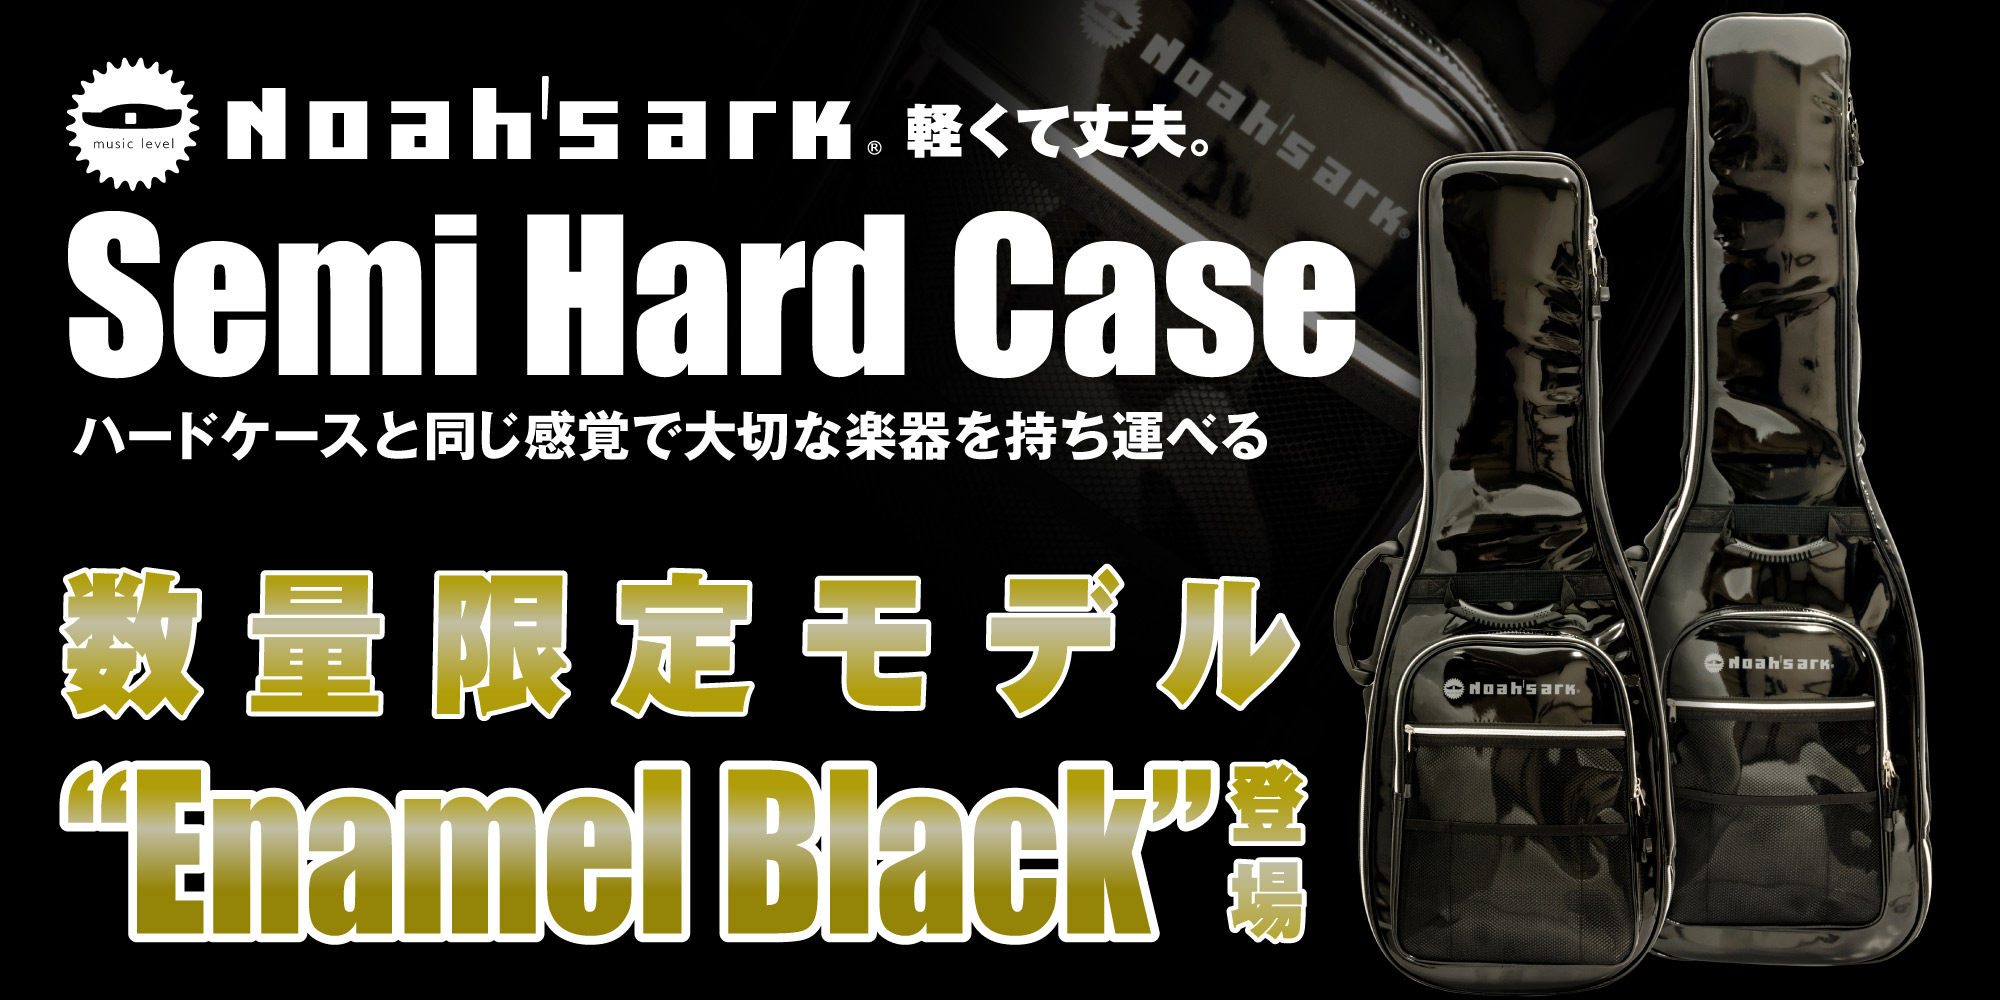 Noah'sark Semi Hard Case数量限定モデル“Enamel Black”が登場！